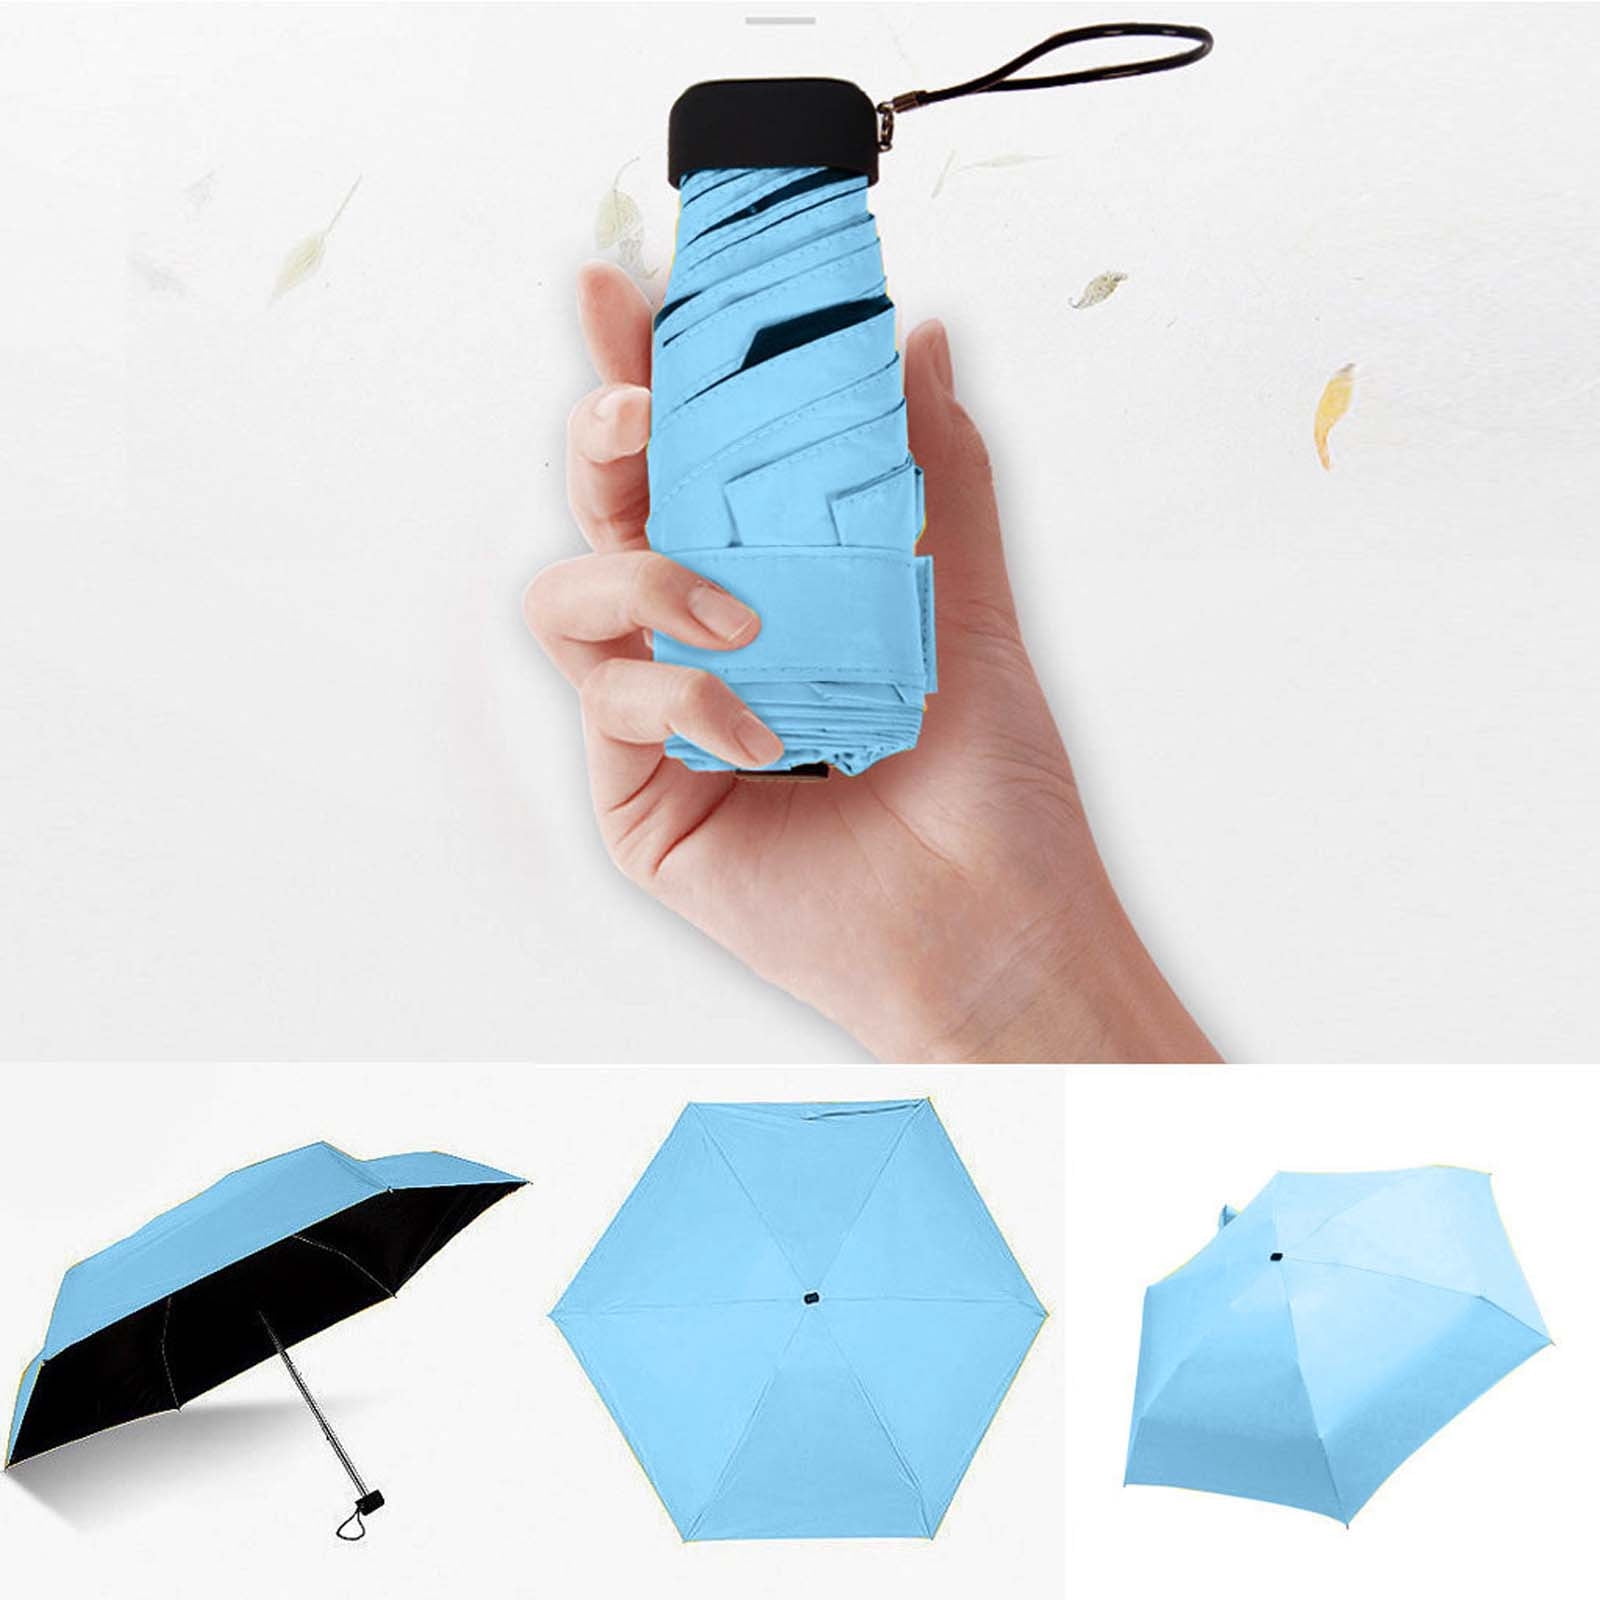 Kokovifyves Travel Small Mini Flat Lightweight Pocket Umbrella for Rain Women and Kids in Store Now Parasol Folding Sun Umbrella Tiny Umbrella c48b1b8e 7cc6 4d96 b35d 348ffa58a640.78247f30c8923cfe733745189c430c69